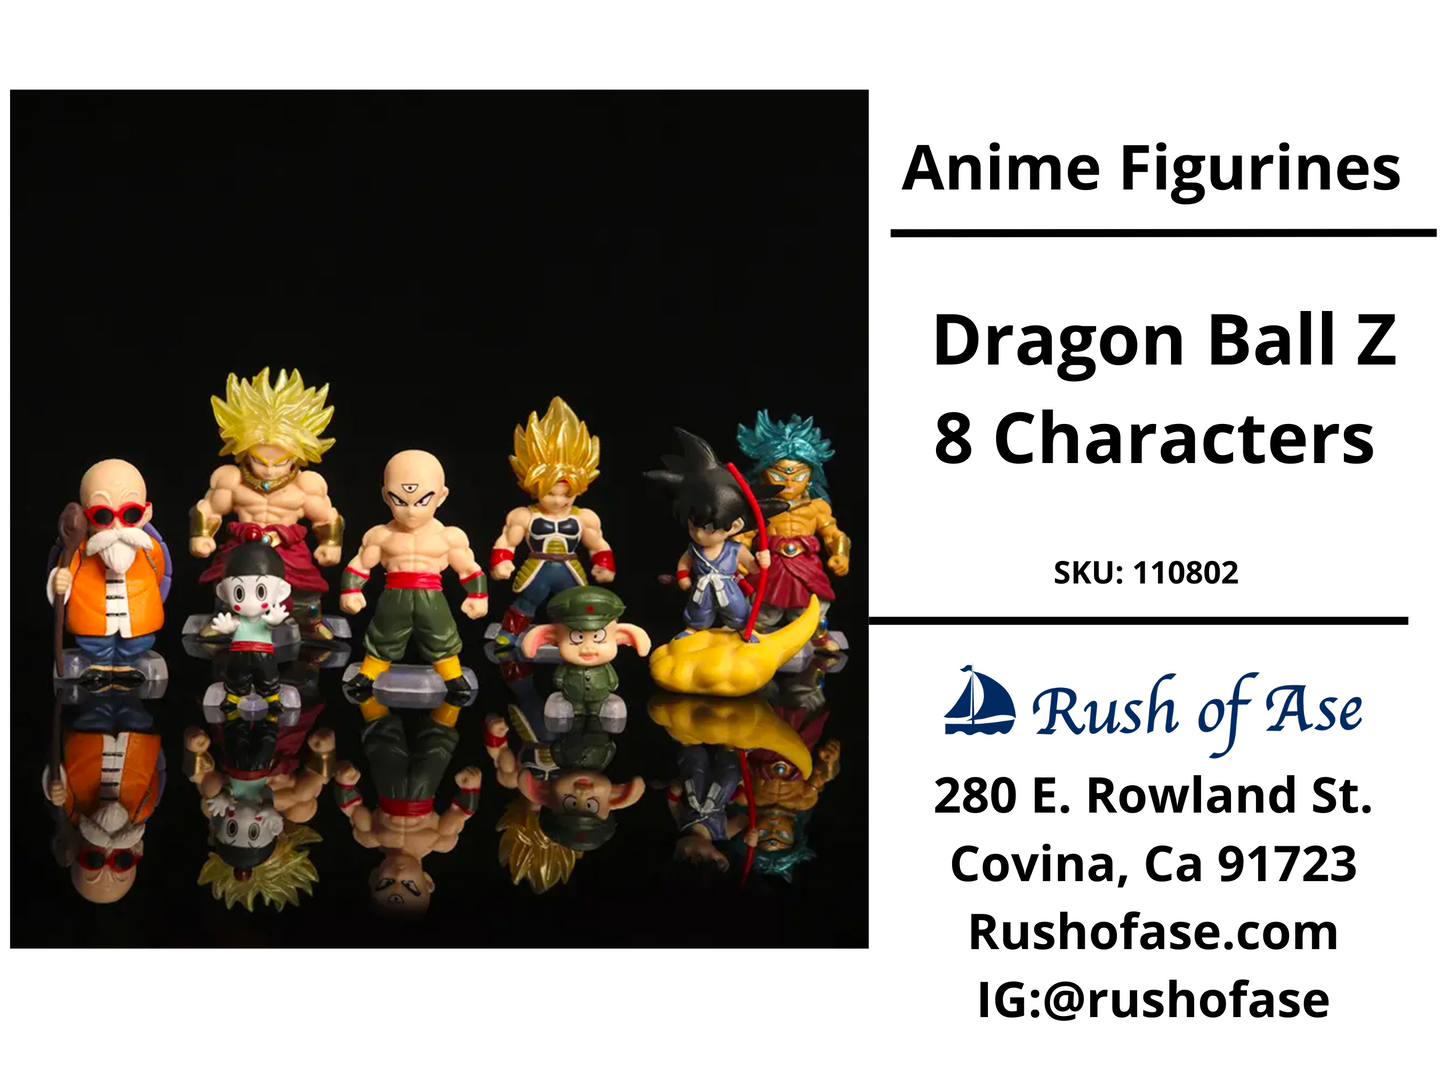 Anime Figurines | Dragon Ball Z